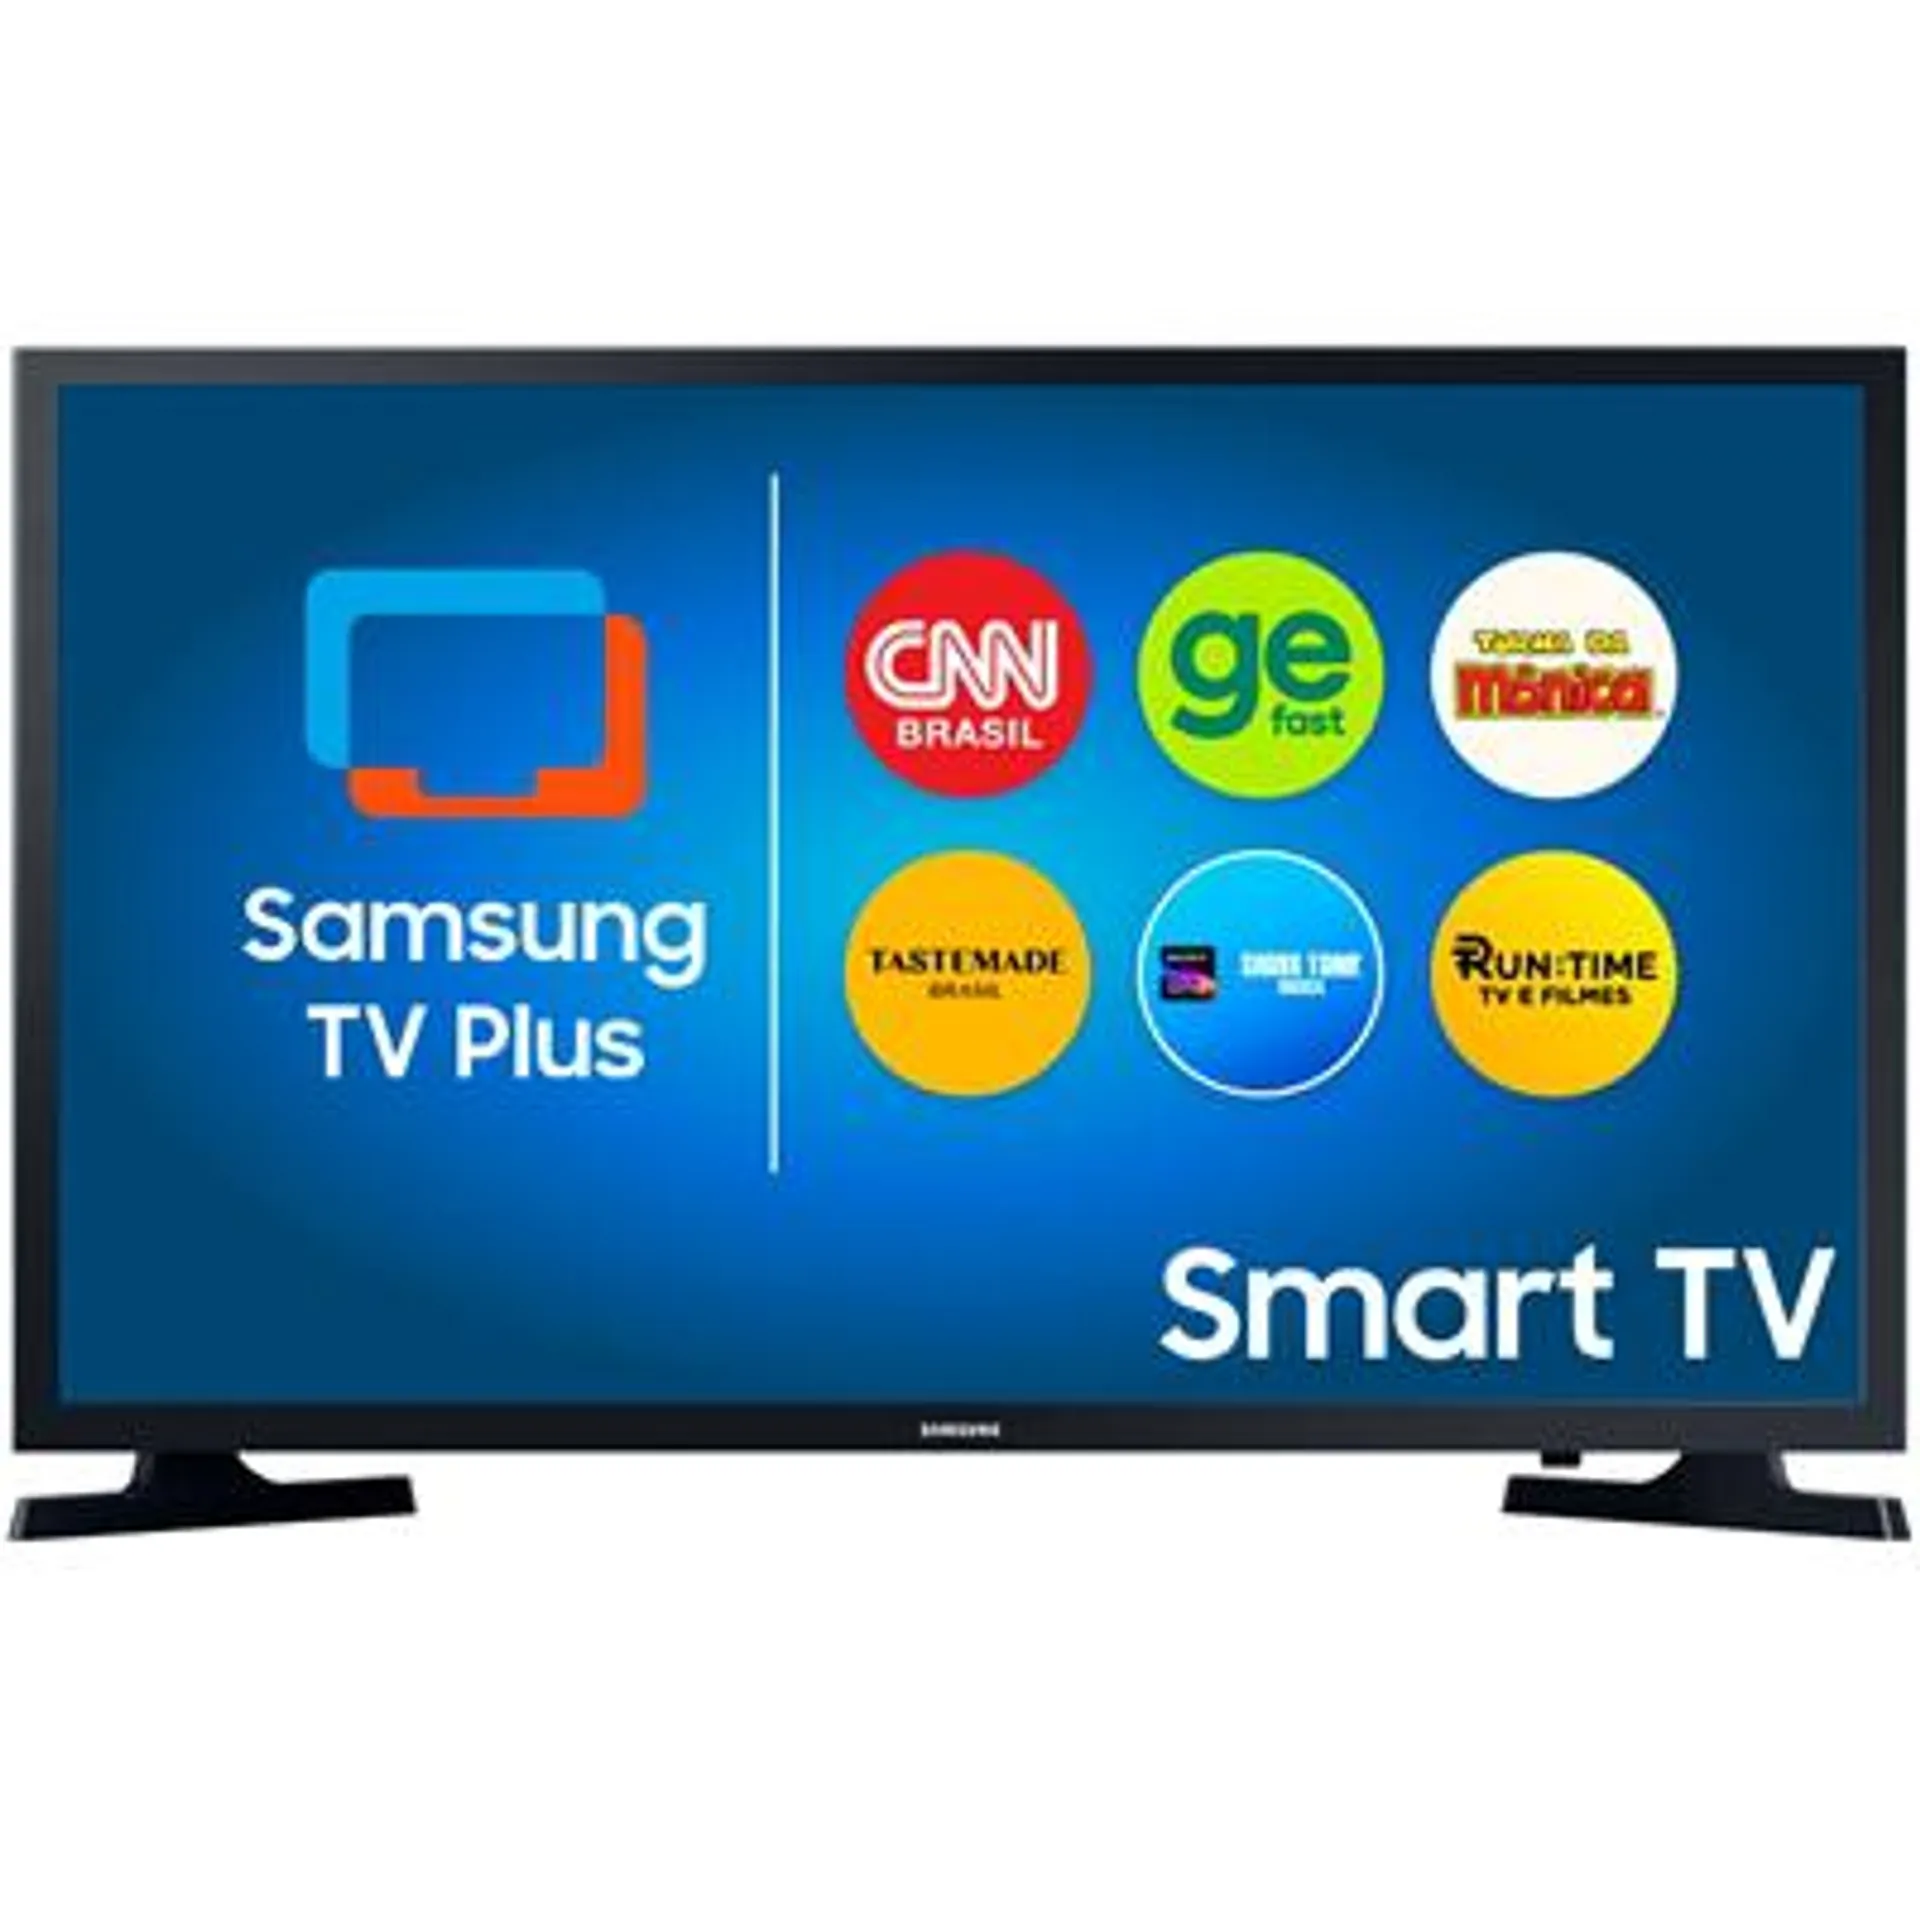 Smart TV Samsung 32" LED HD, OS Tizen, Wi-fi, HDR, HDMI, USB - Preto